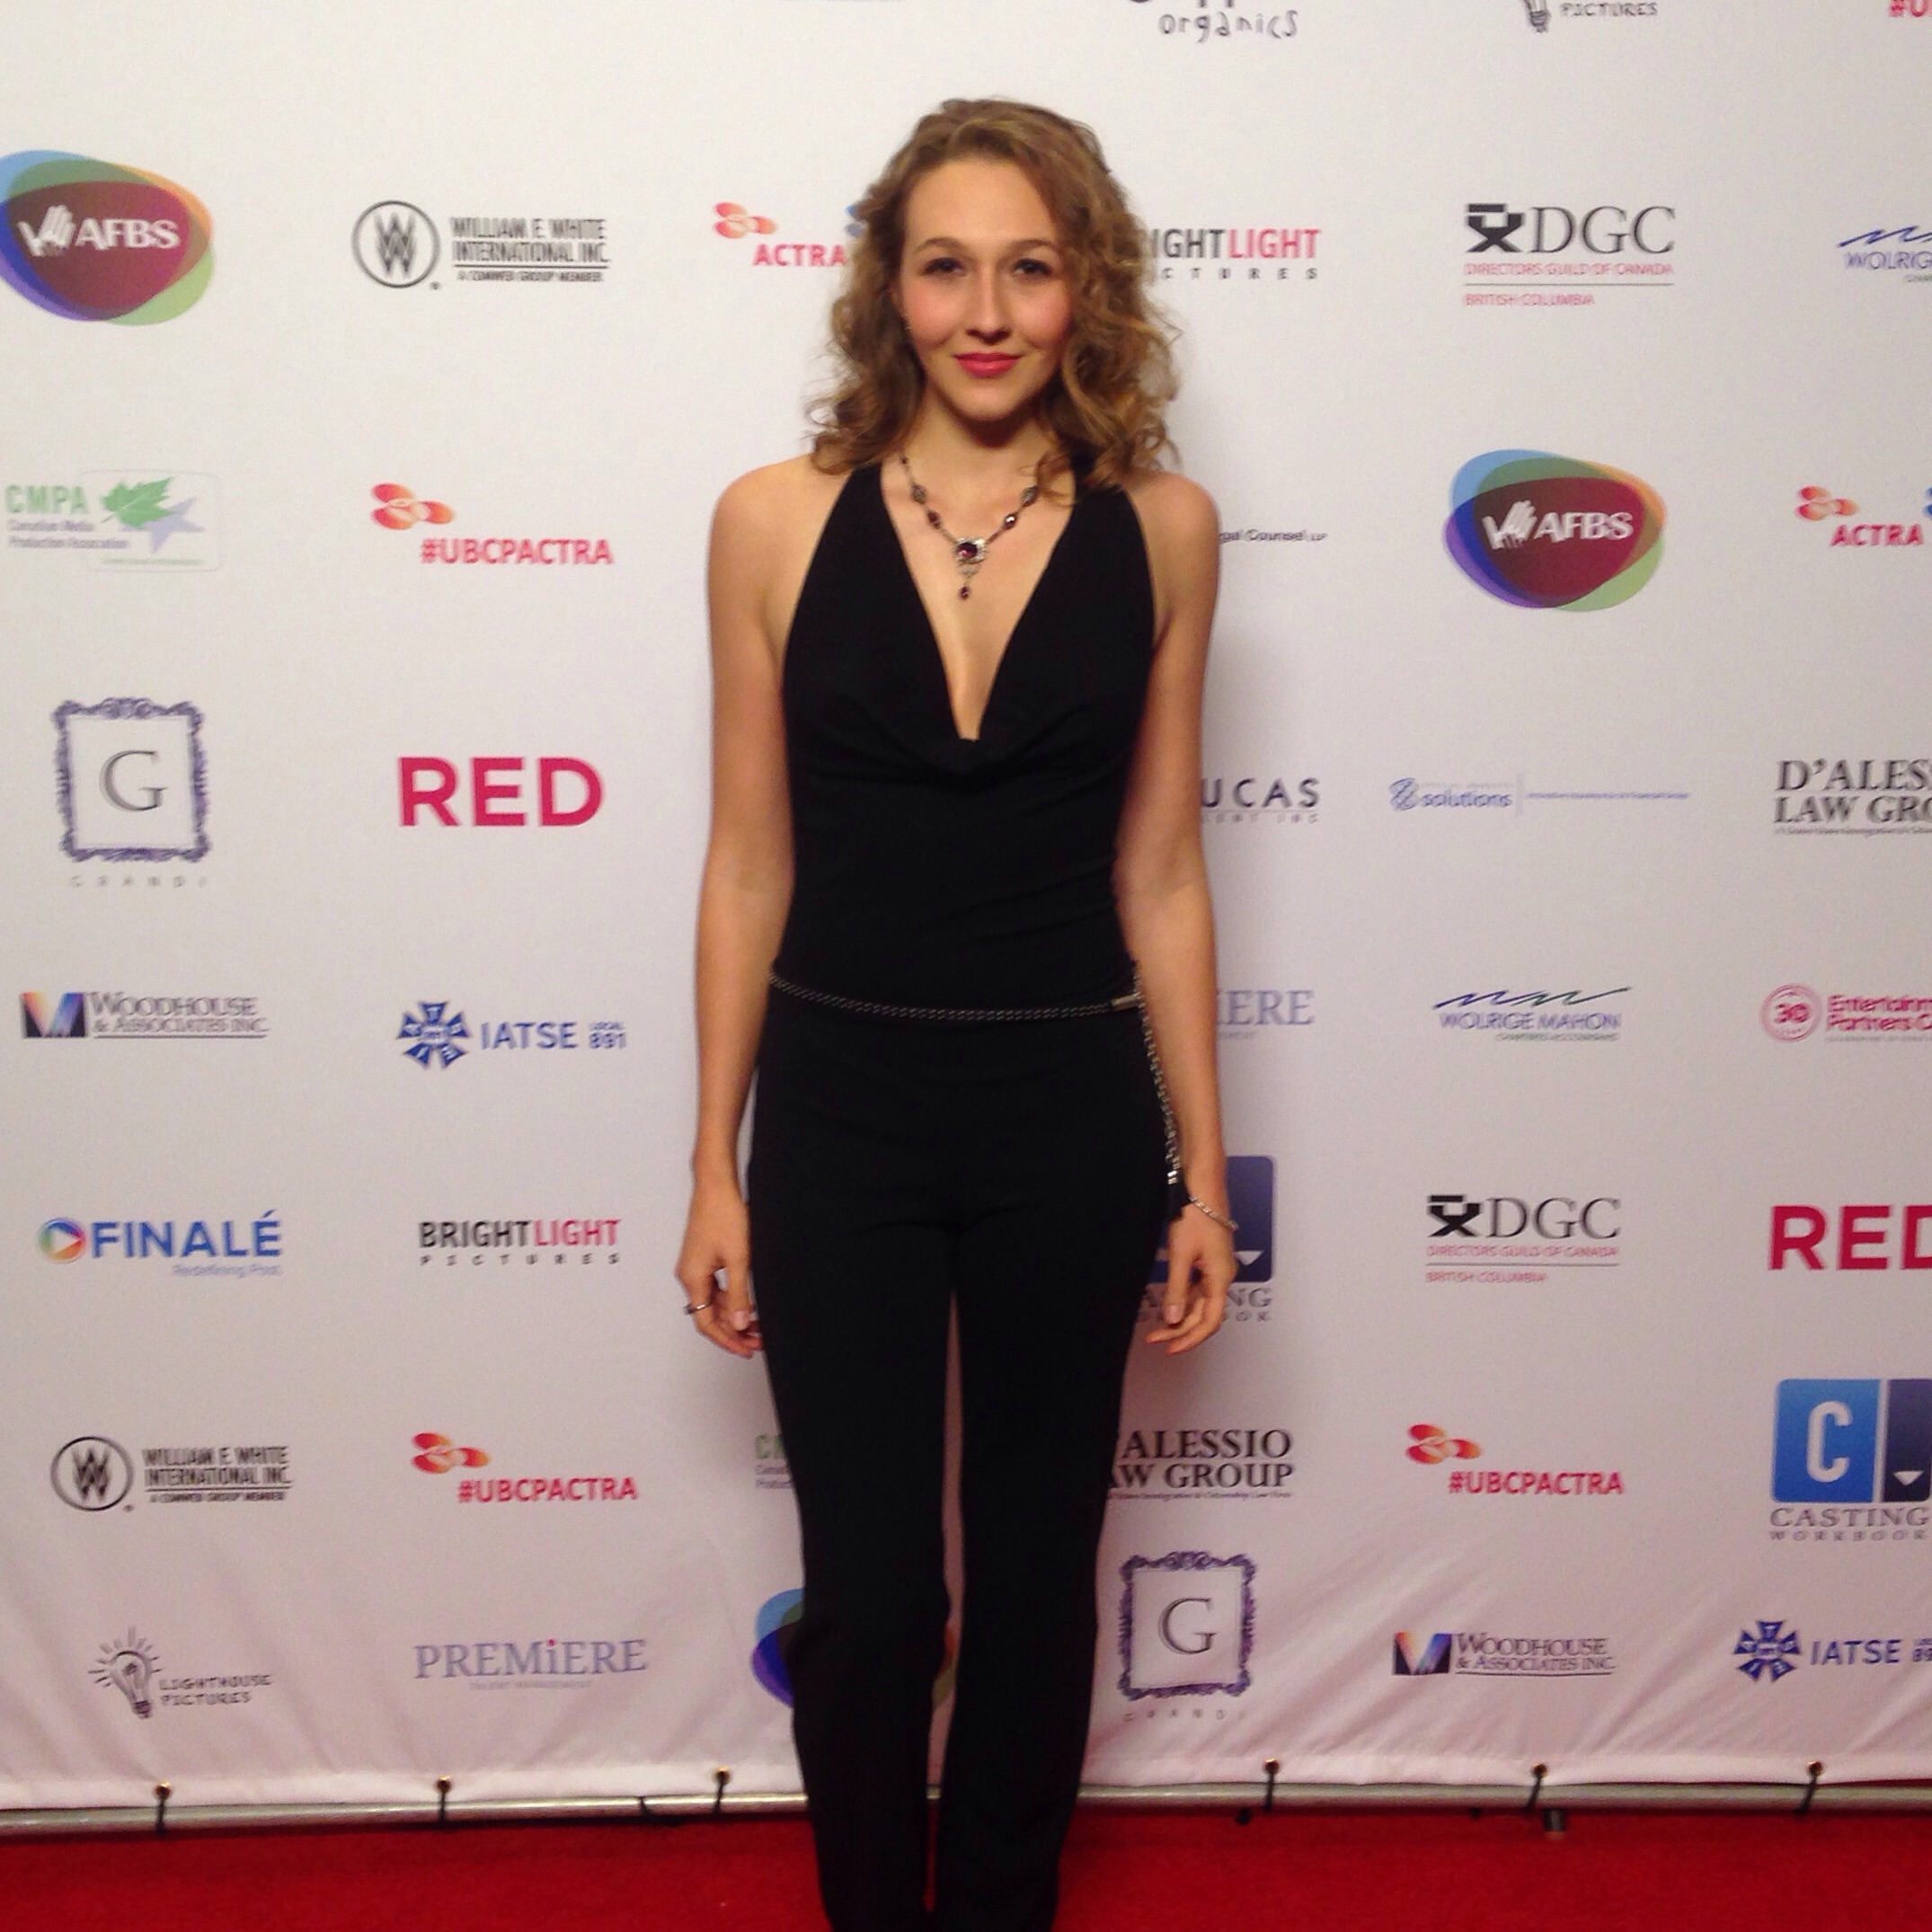 Ava Vanderstarren at the 2015 UBCP/ACTRA Awards Gala